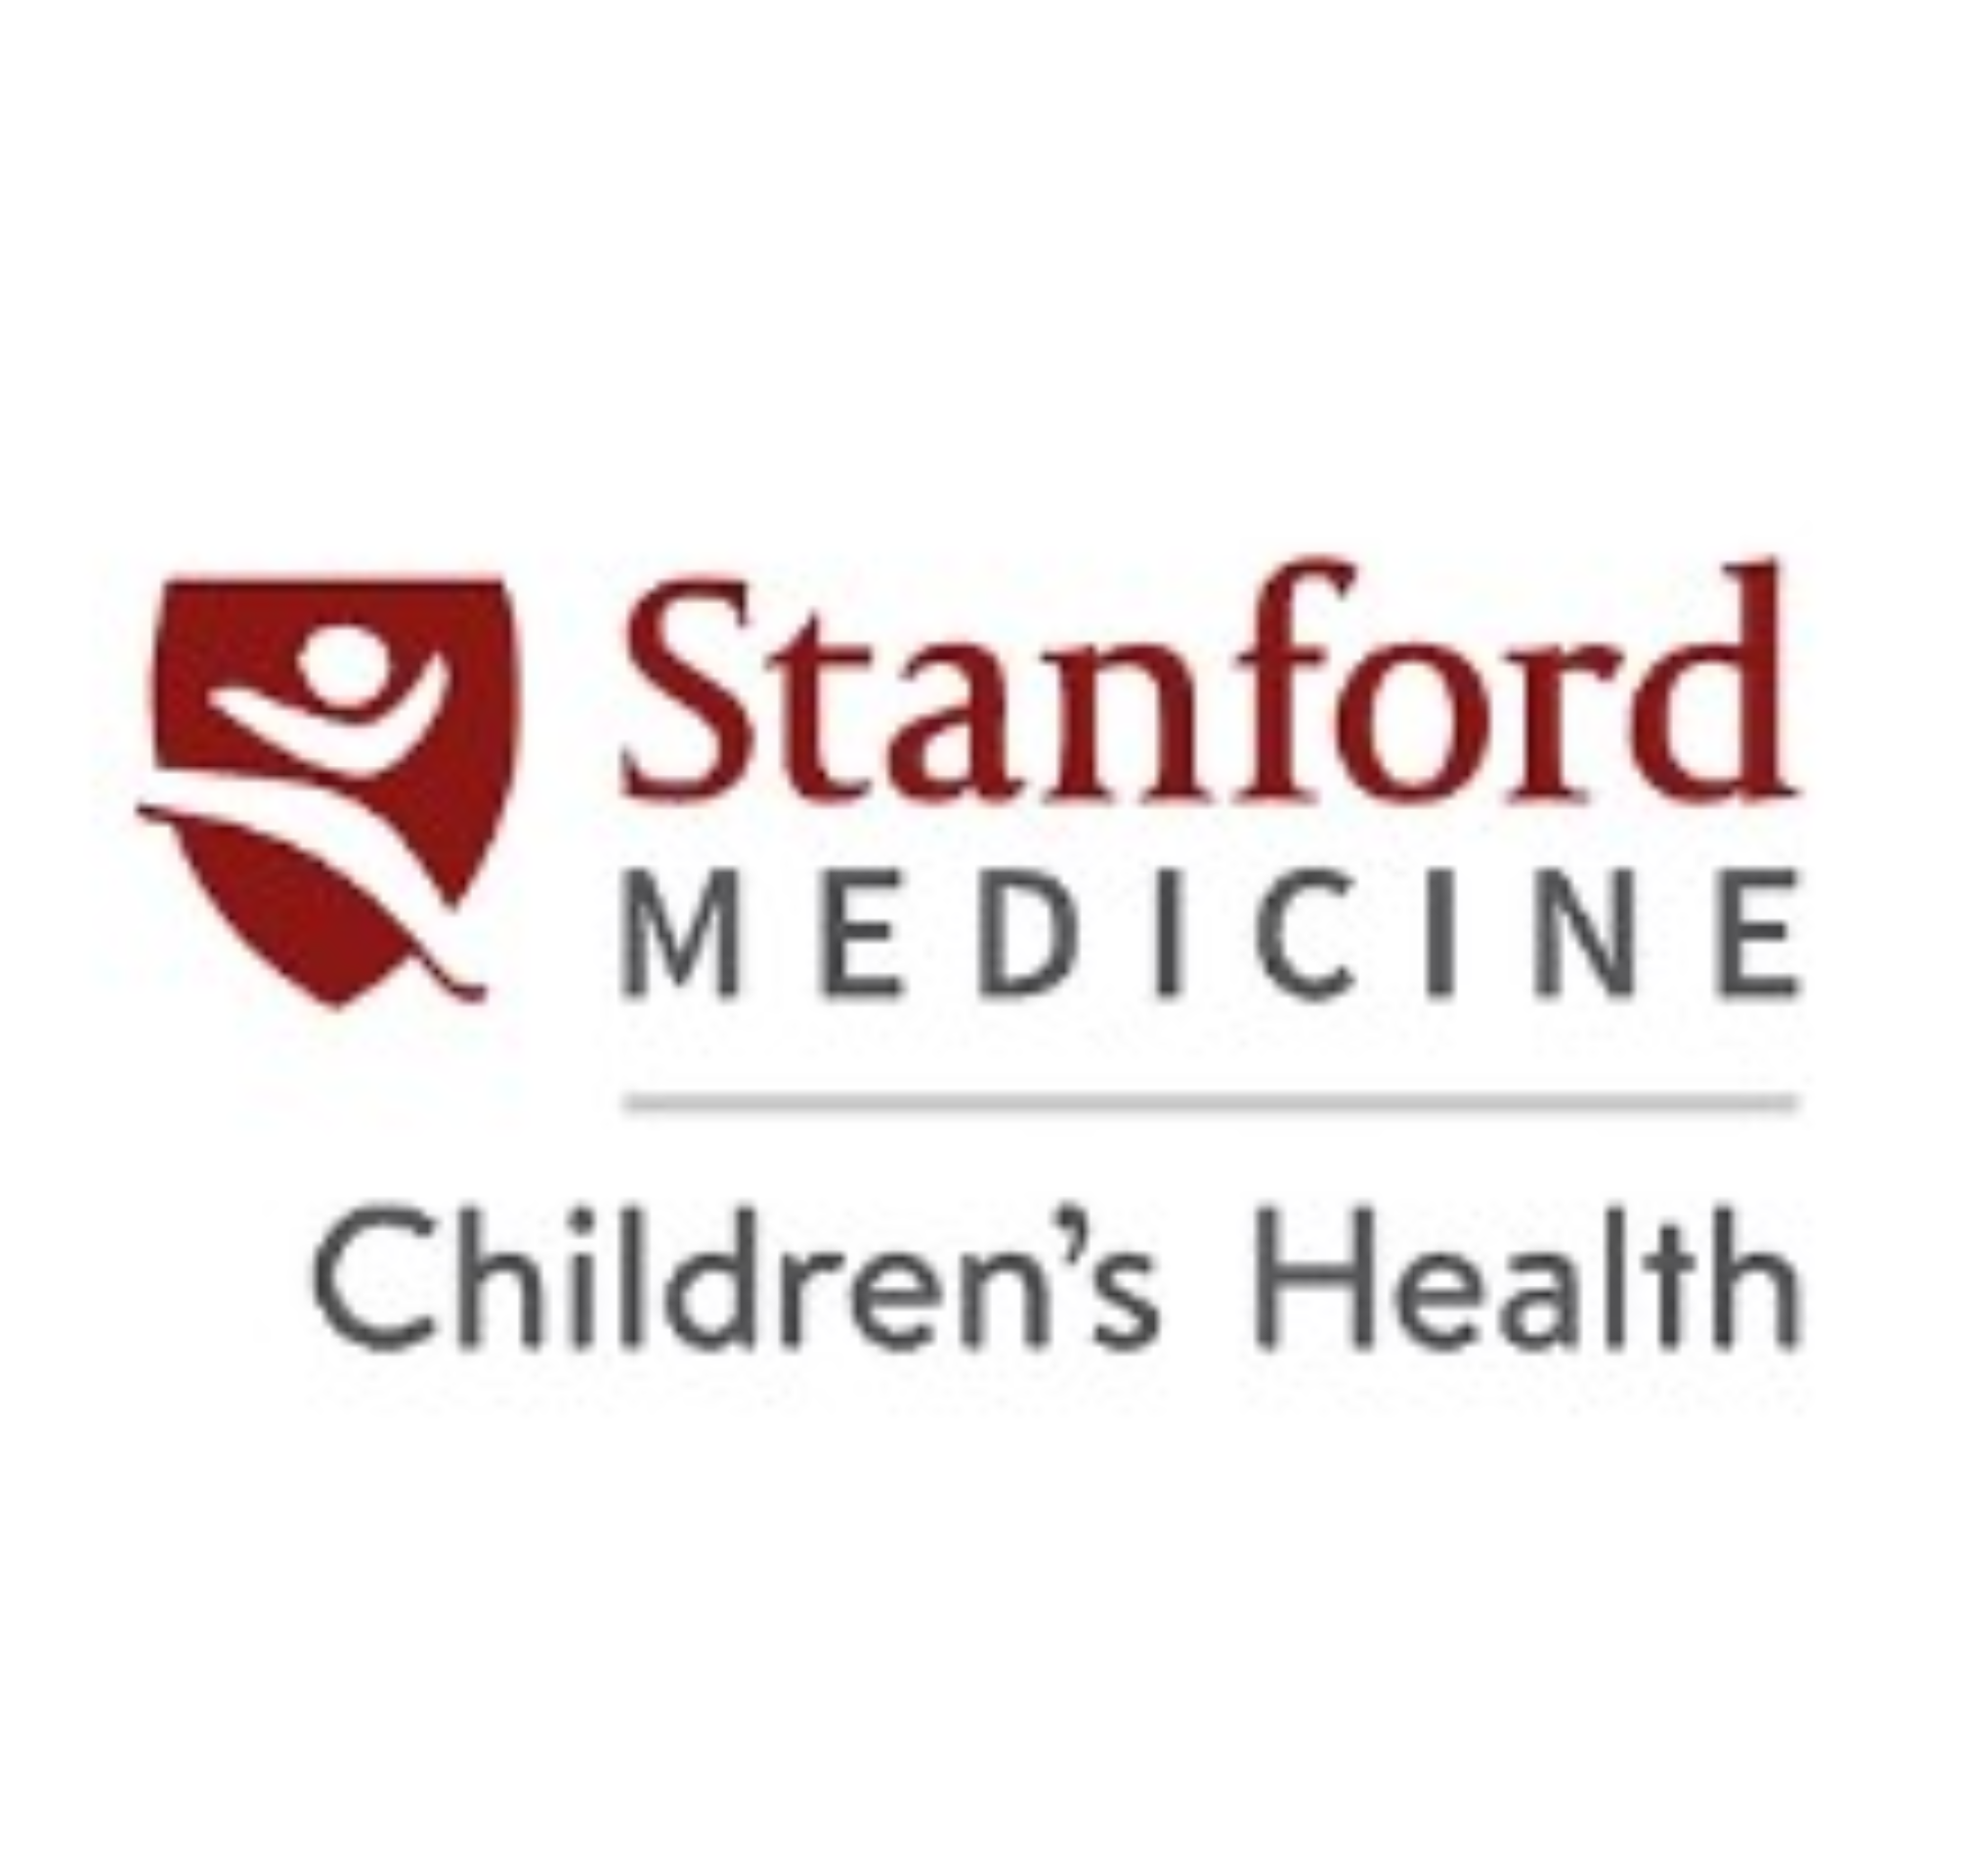 Stanford children's Hospital